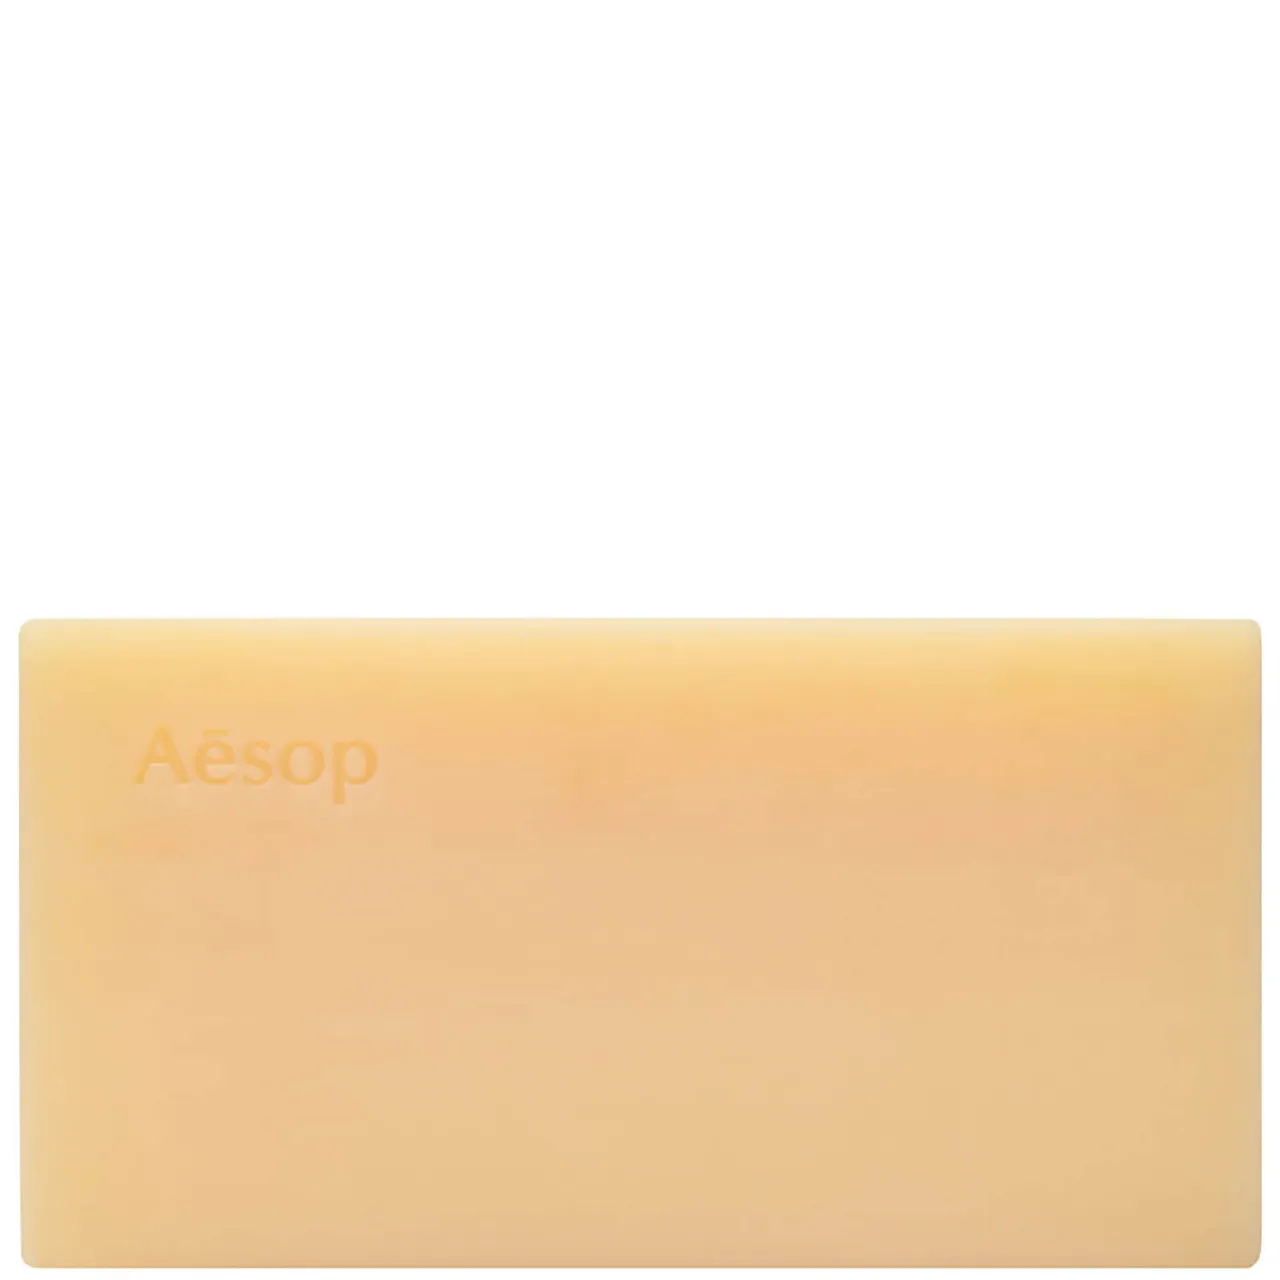 Aesop Refresh Bar Soap 150g